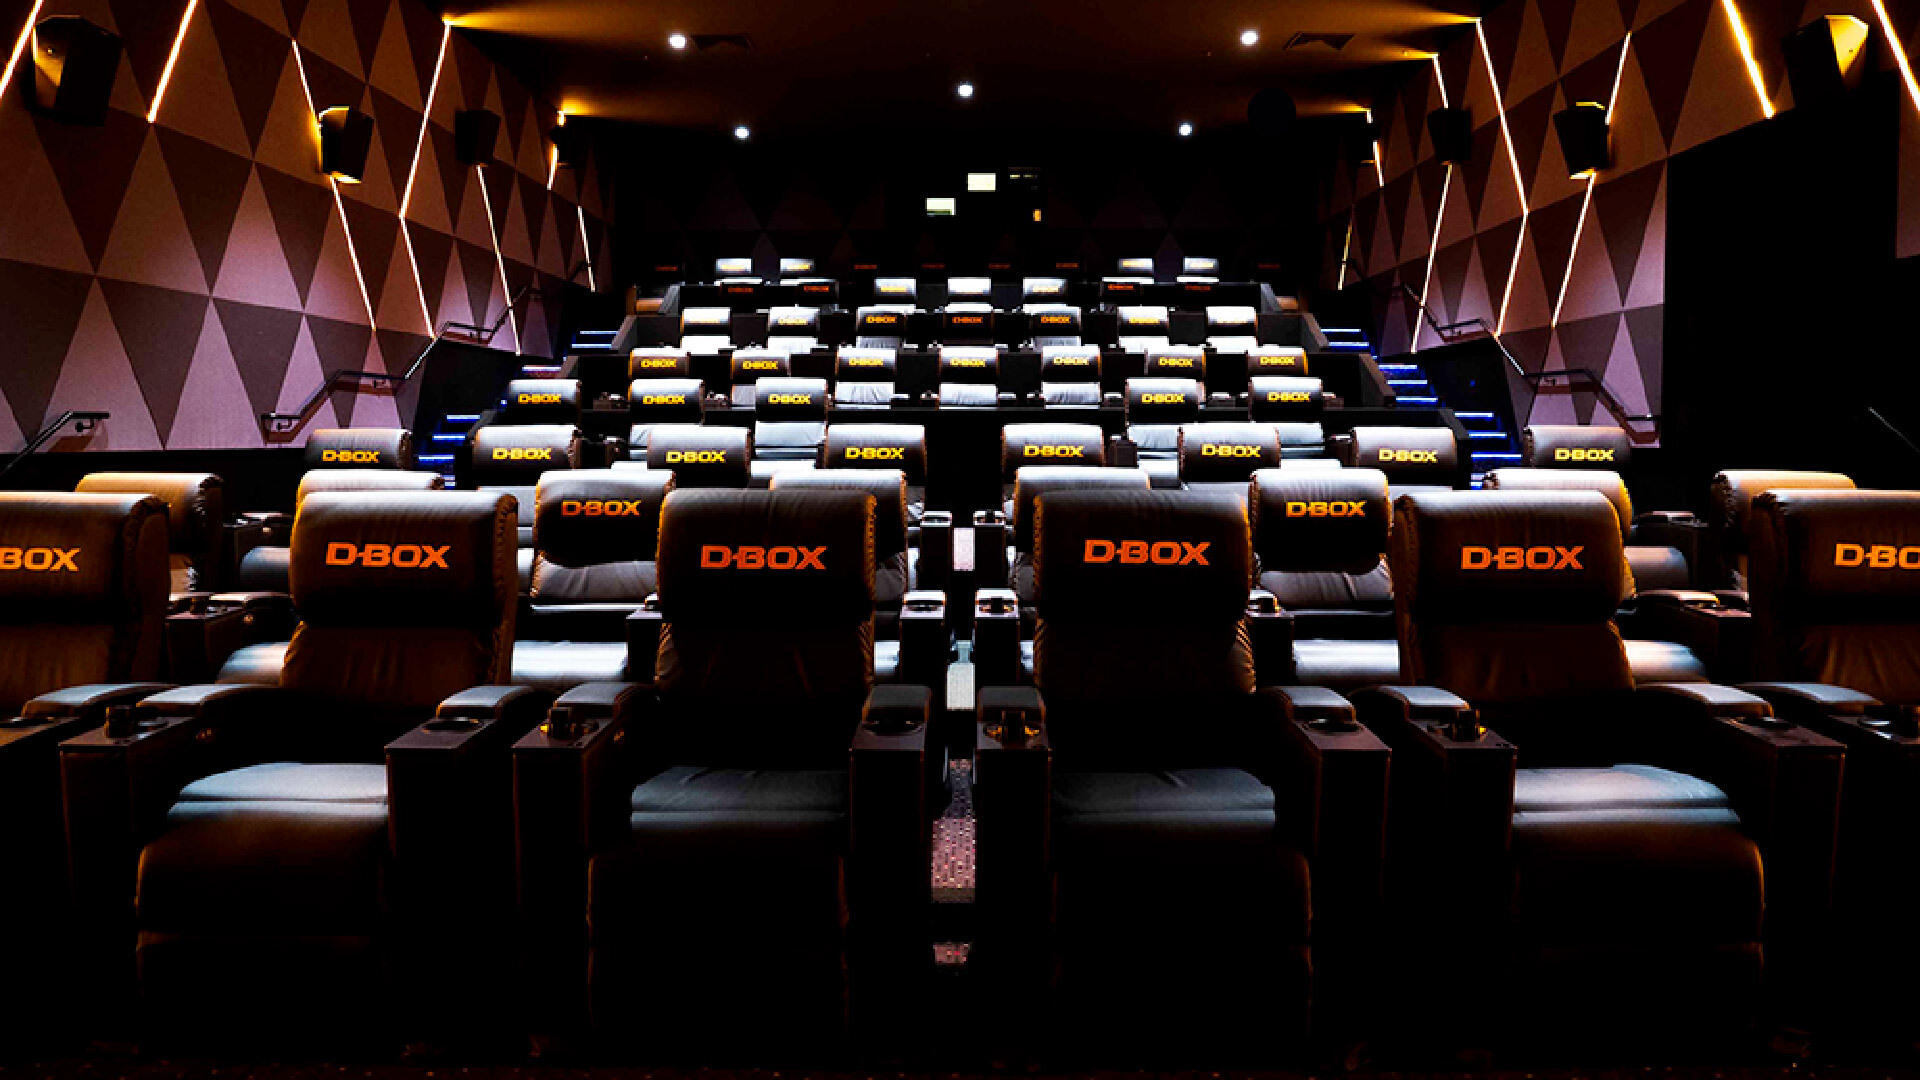 D-Box chairs in a cinema. 